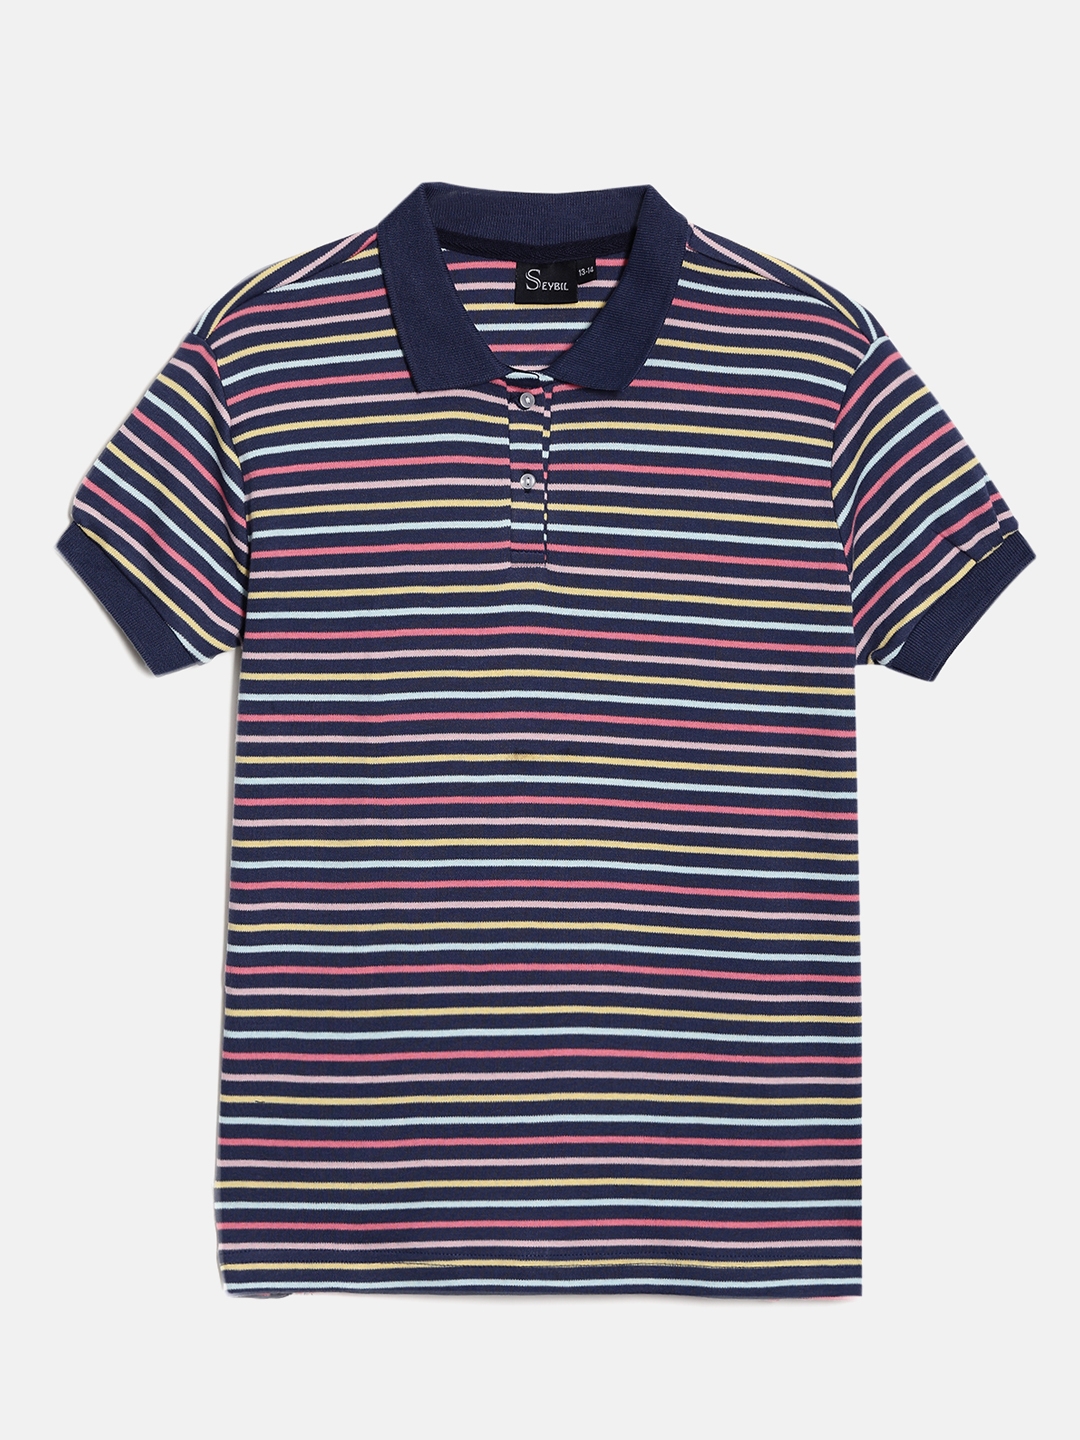 SEYBIL | Seybil Teen girls Navy cotton striped polo Tshirt